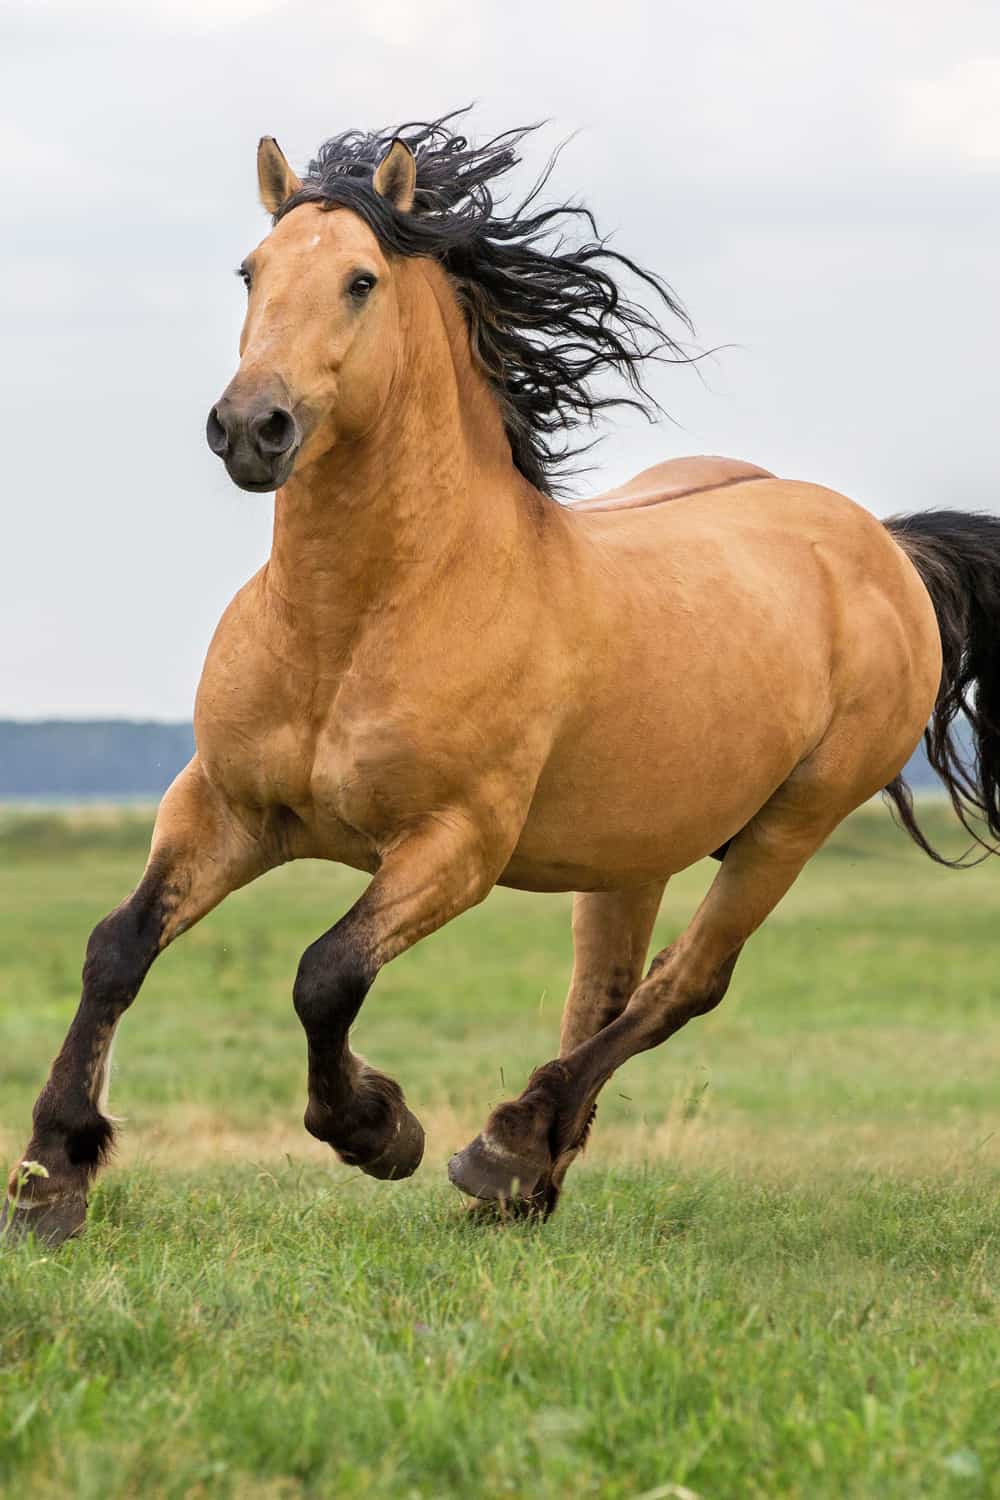 How Long Can a Horse Run